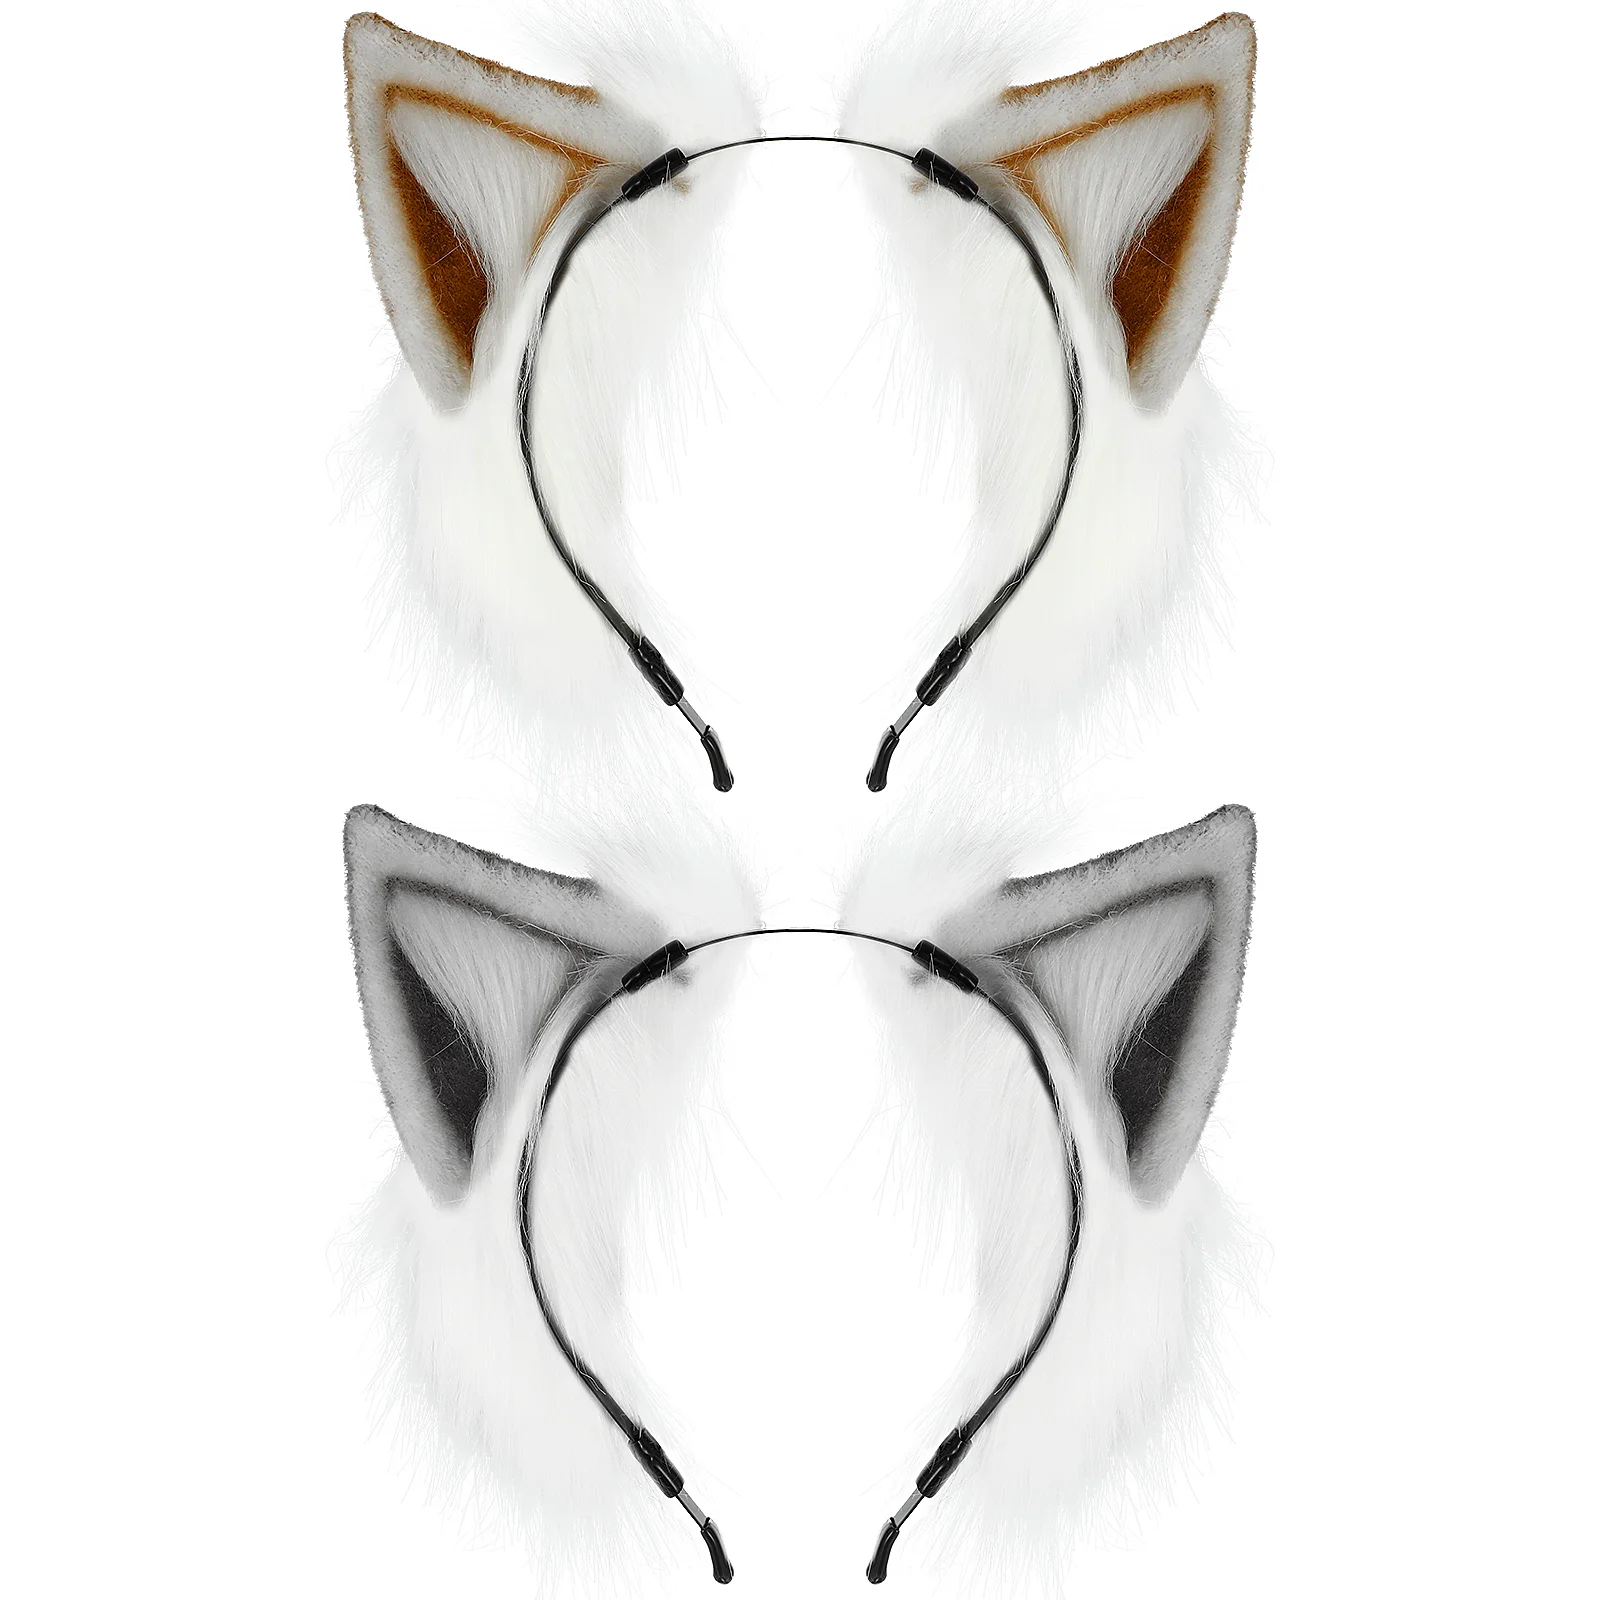 

2 Pcs Animal Ears Headbands Cartoon Style Furry Fox Ears Hair Hoops Headdress Accessories for Daily Cosplay Party